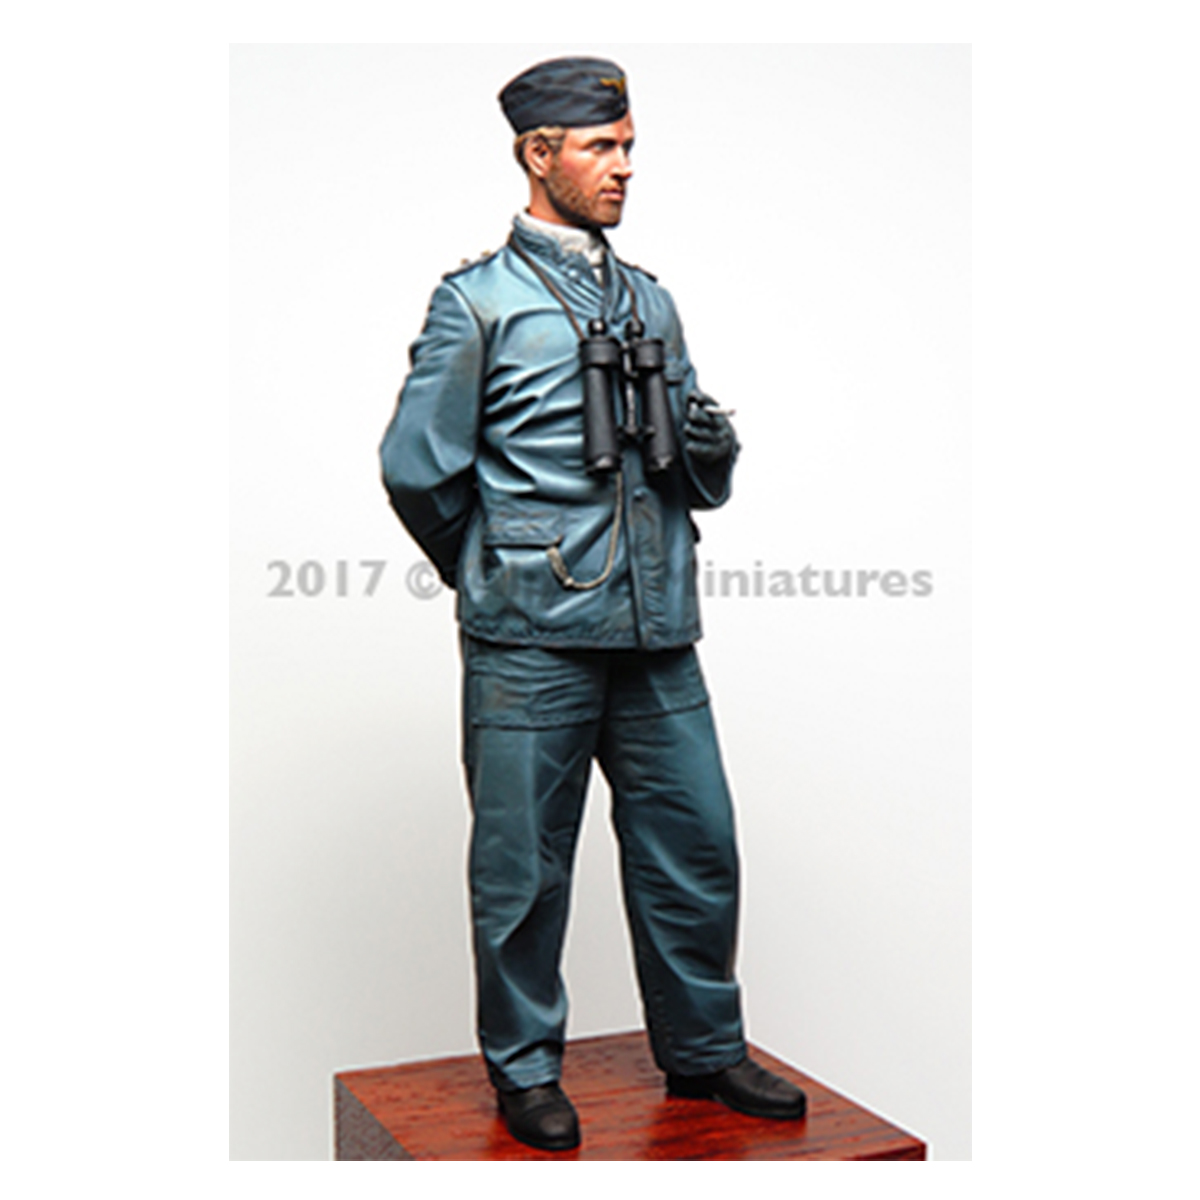 Alpine Miniatures – German U-Boat Watch Officer (1/16)